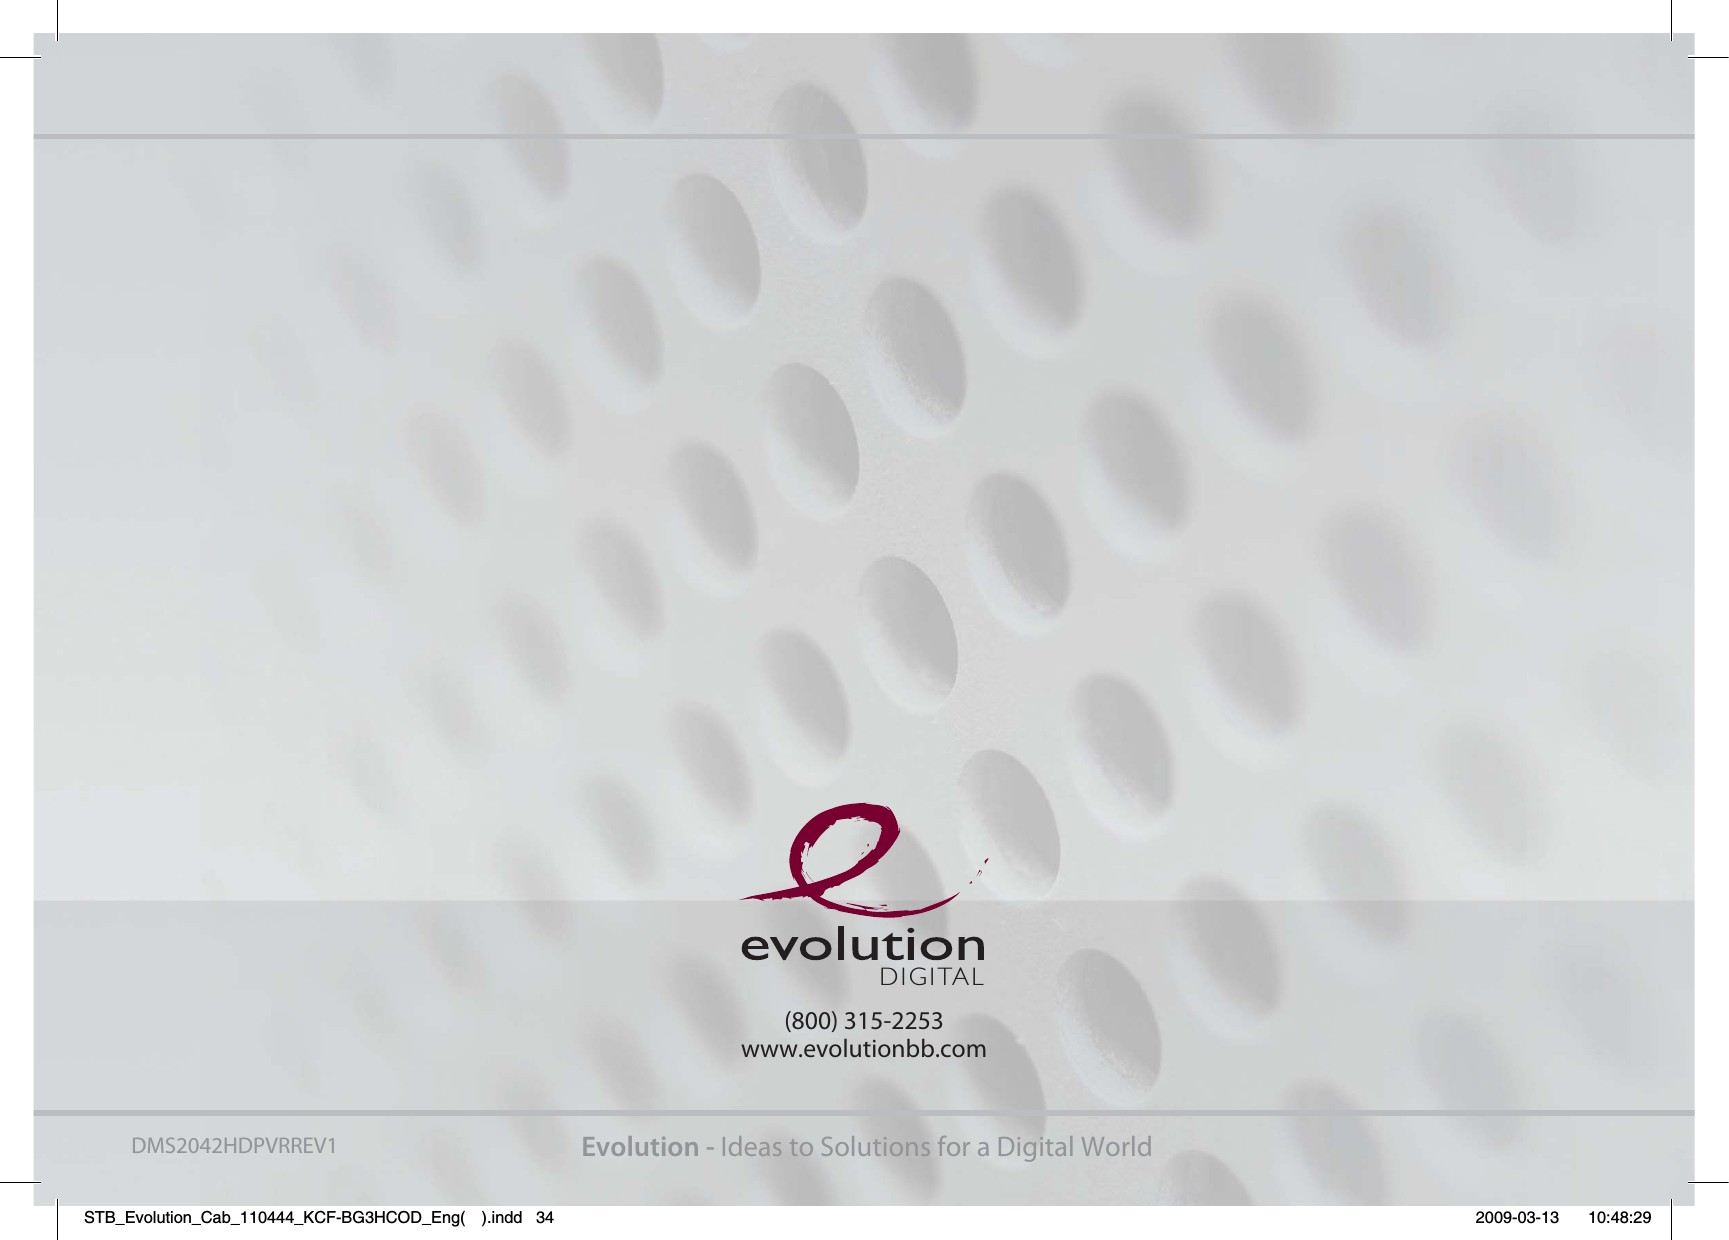 Evolution - Ideas to Solutions for a Digital World(800) 315-2253www.evolutionbb.comDIGITALDMS2042HDPVRREV1STB_Evolution_Cab_110444_KCF-BG3HCOD_Eng( ).indd   34 2009-03-13     10:48:29